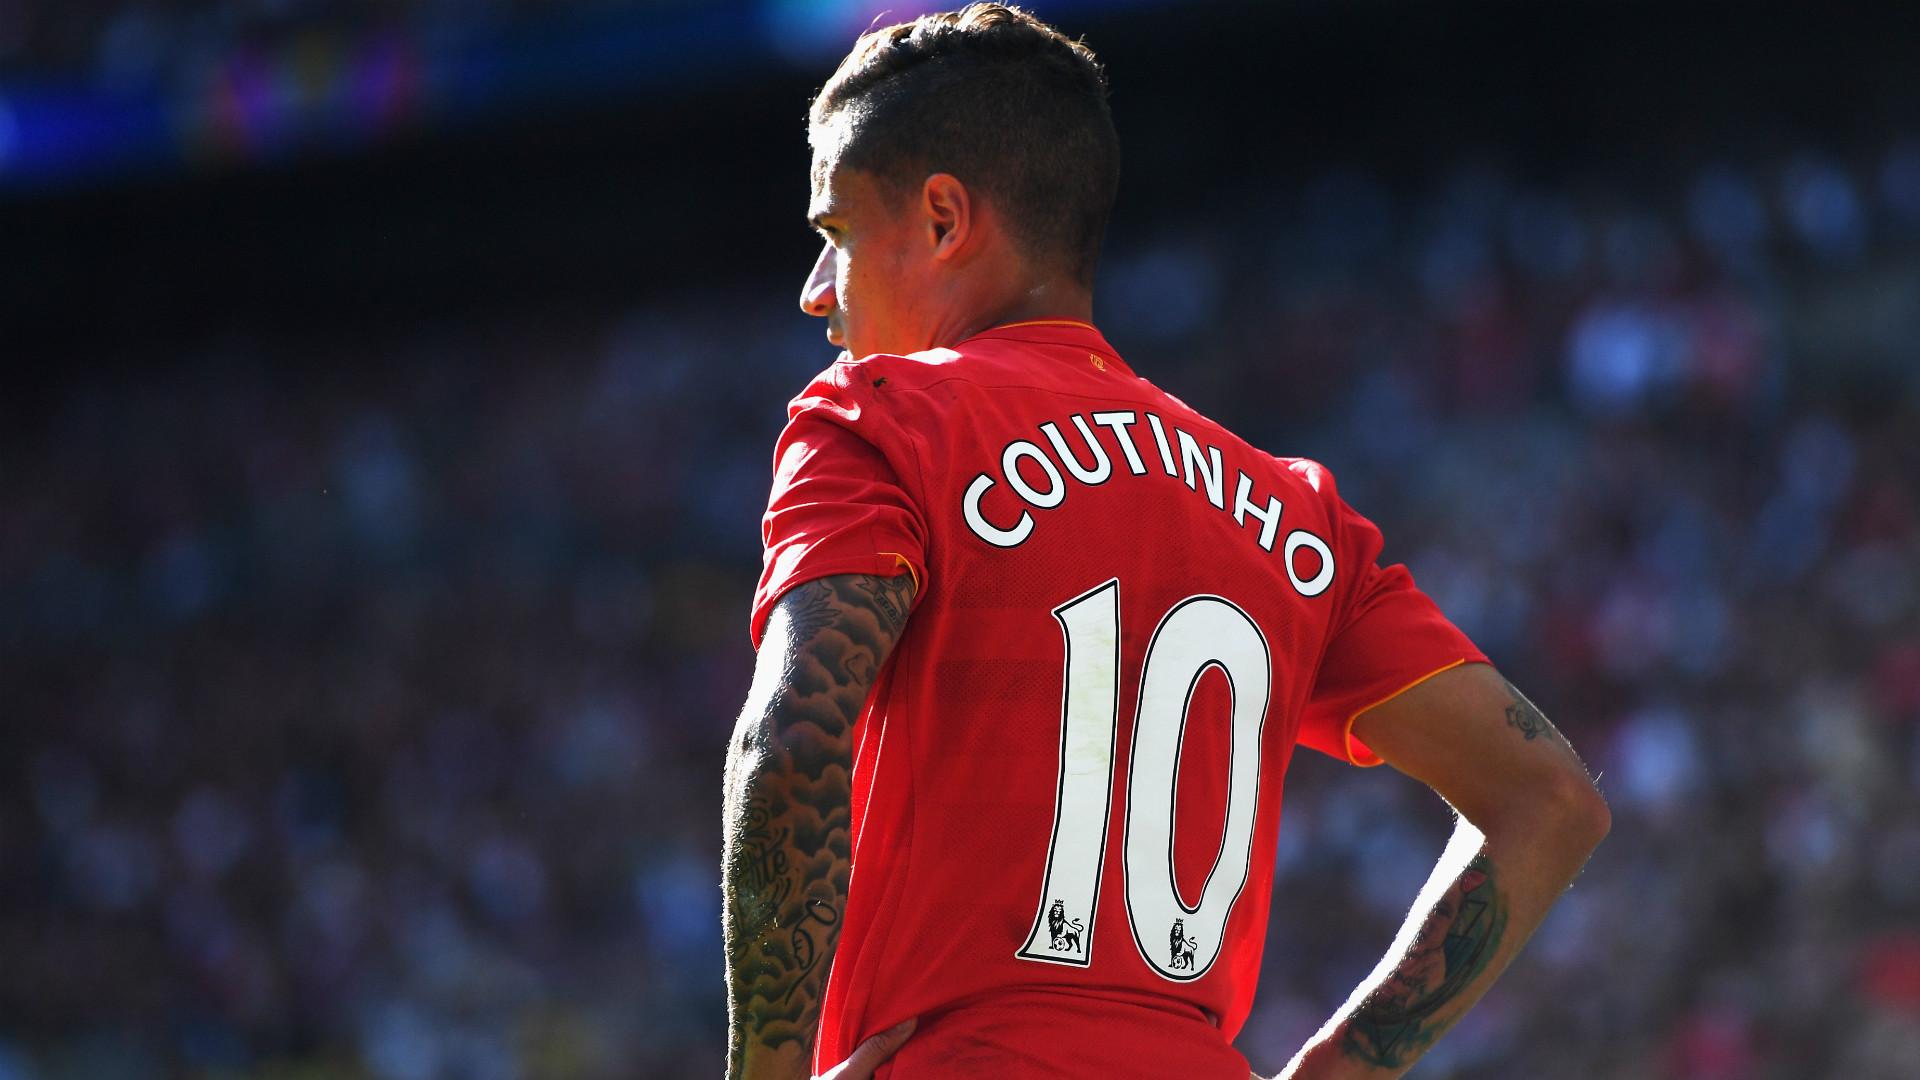 Transferi uživo: Coutinho zatražio od Liverpoola da ga puste u Barcelonu